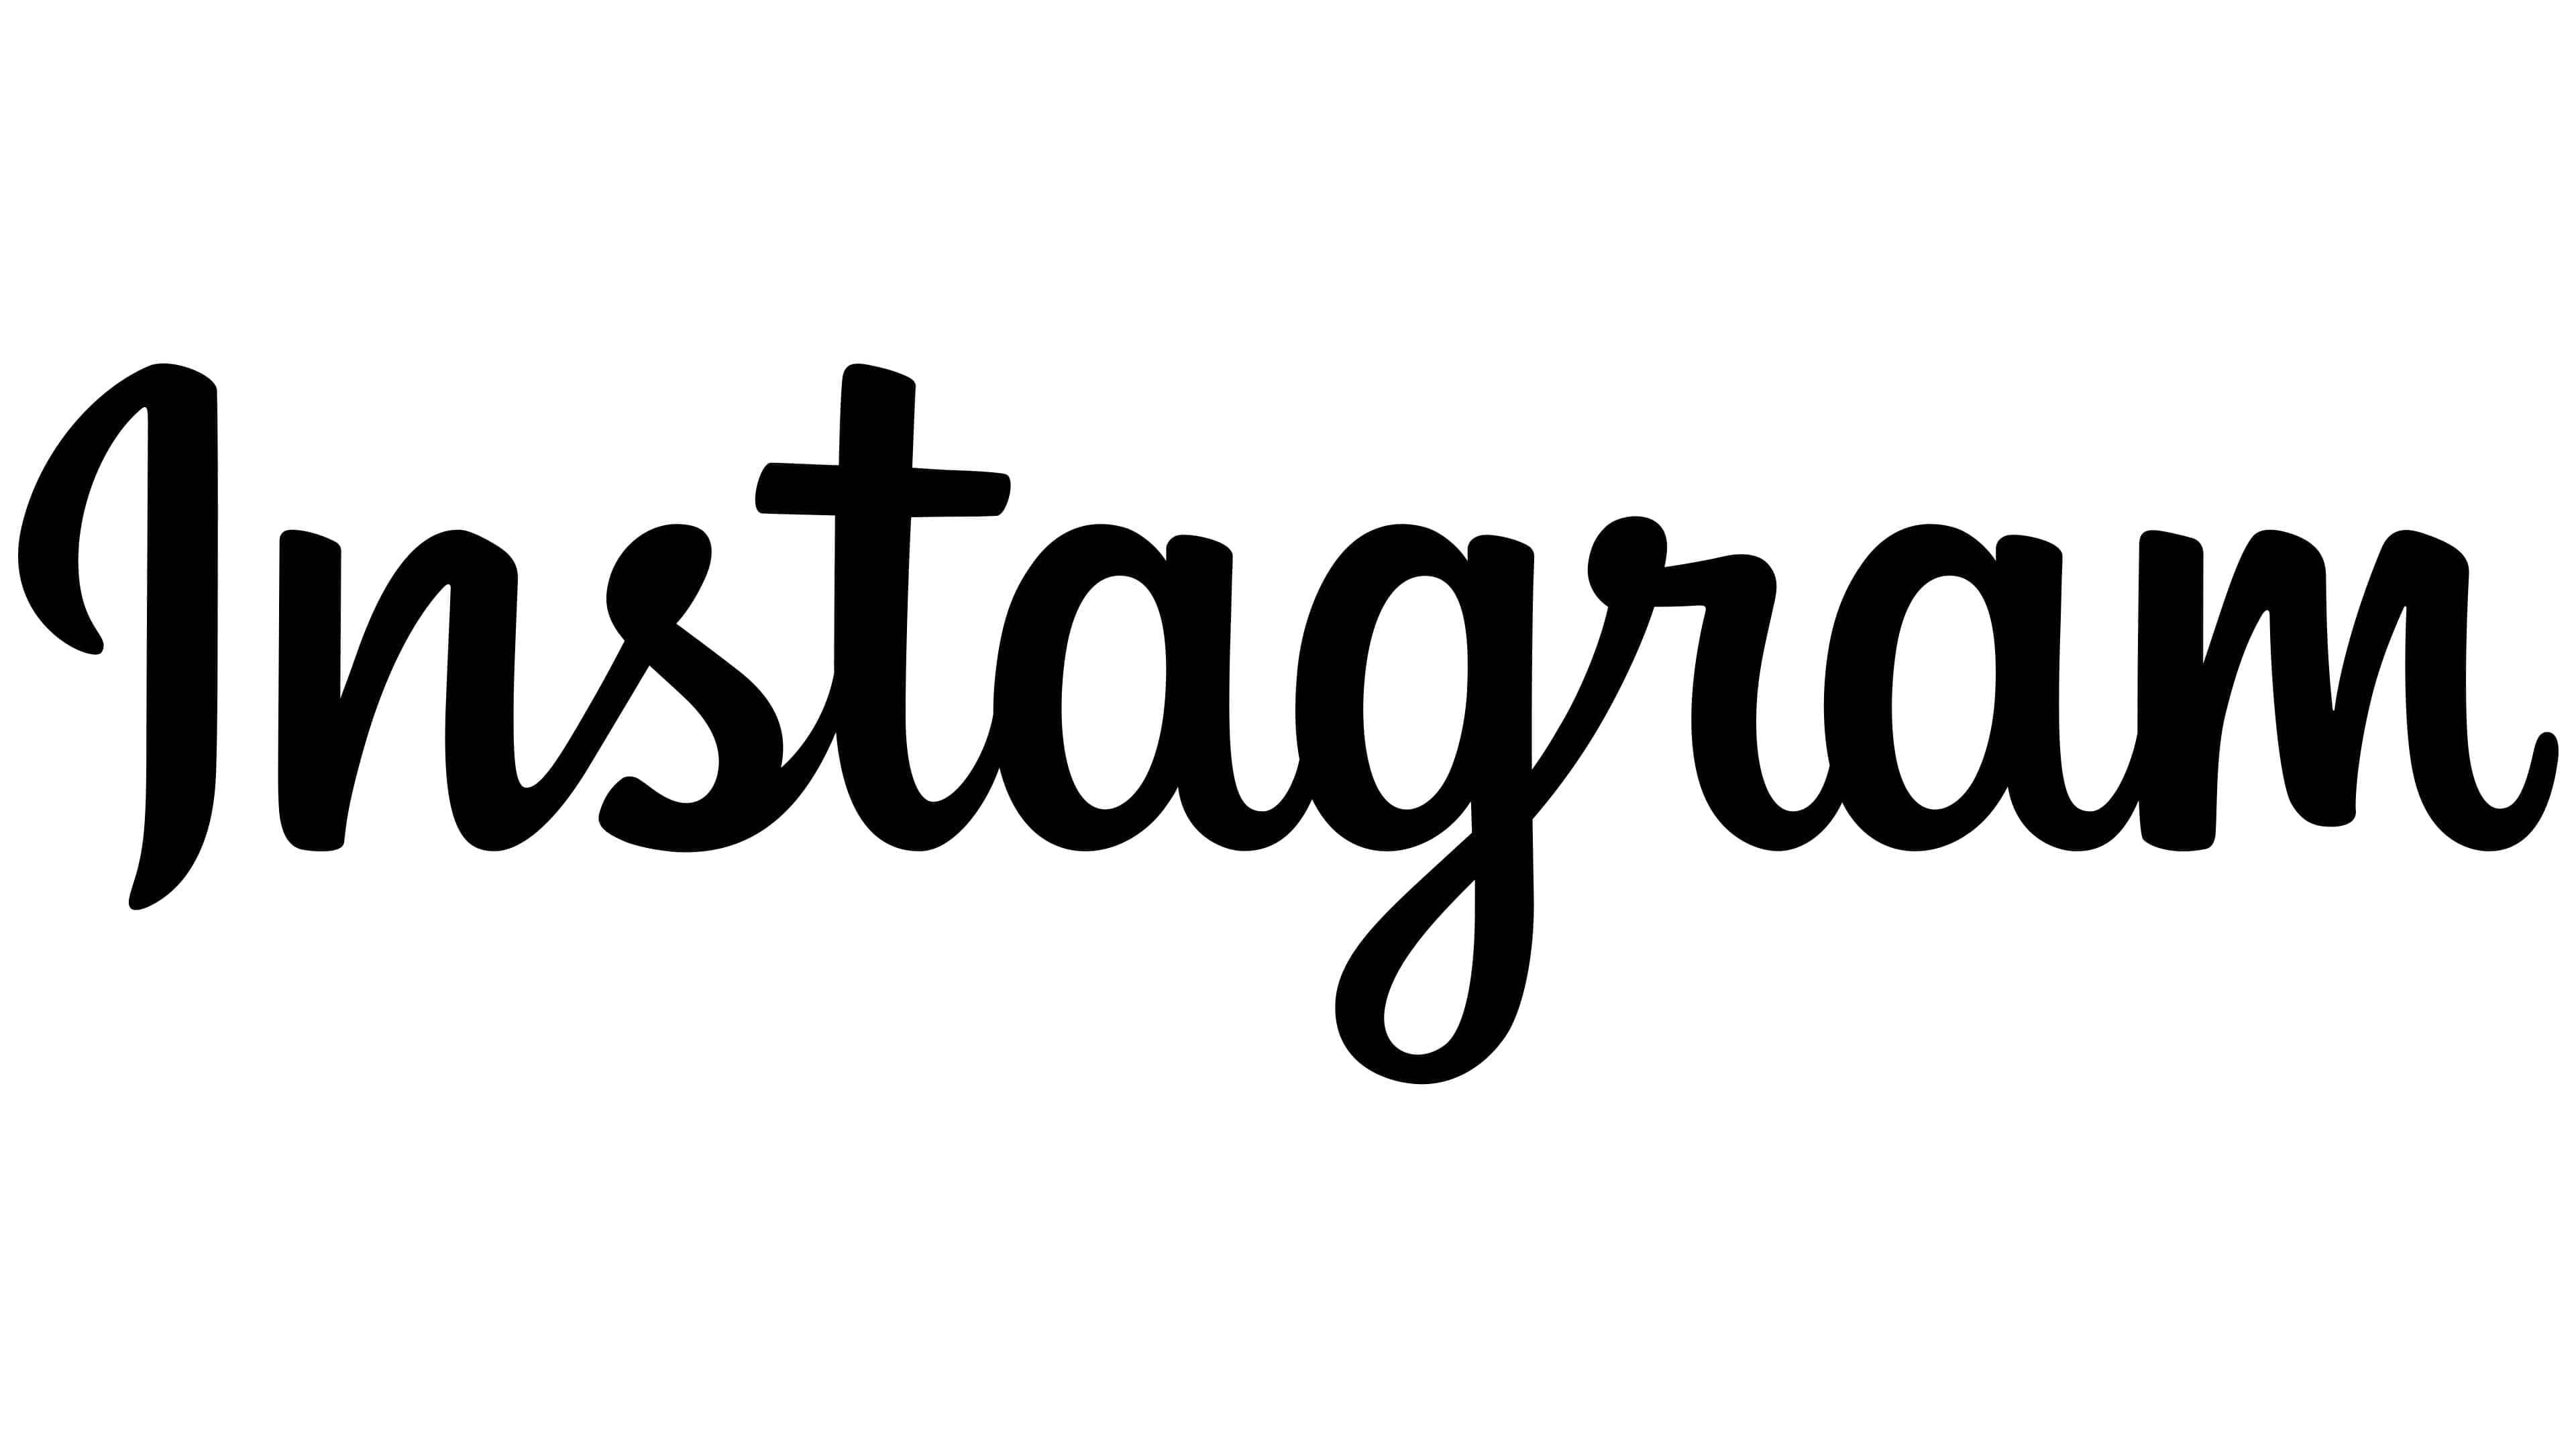 Instagram Logo | Symbol, History, PNG (3840*2160)